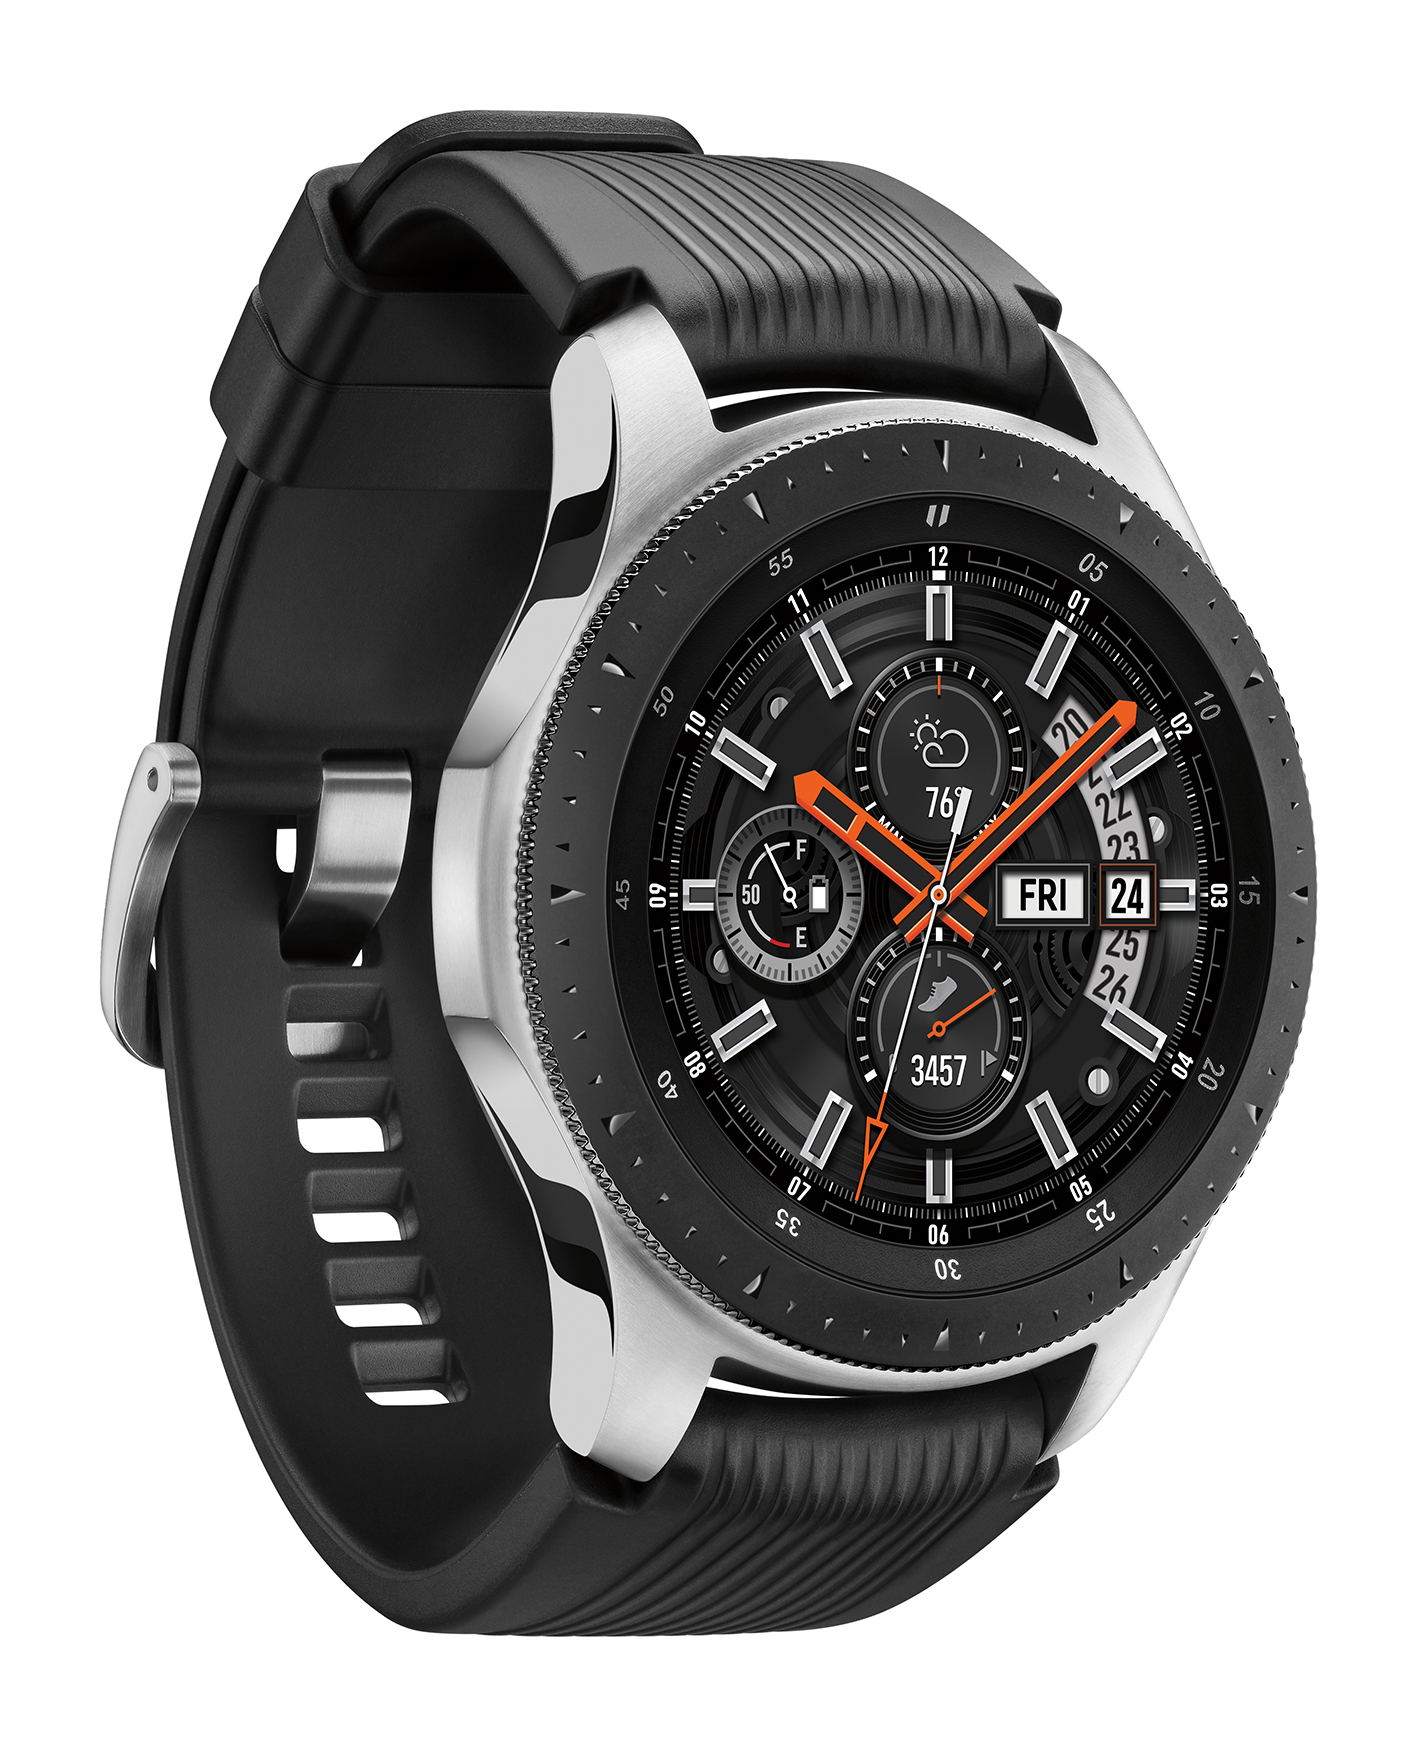 SAMSUNG Galaxy Watch - Bluetooth Smart Watch (46mm) - Silver - SM-R800NZSAXAR - image 3 of 15